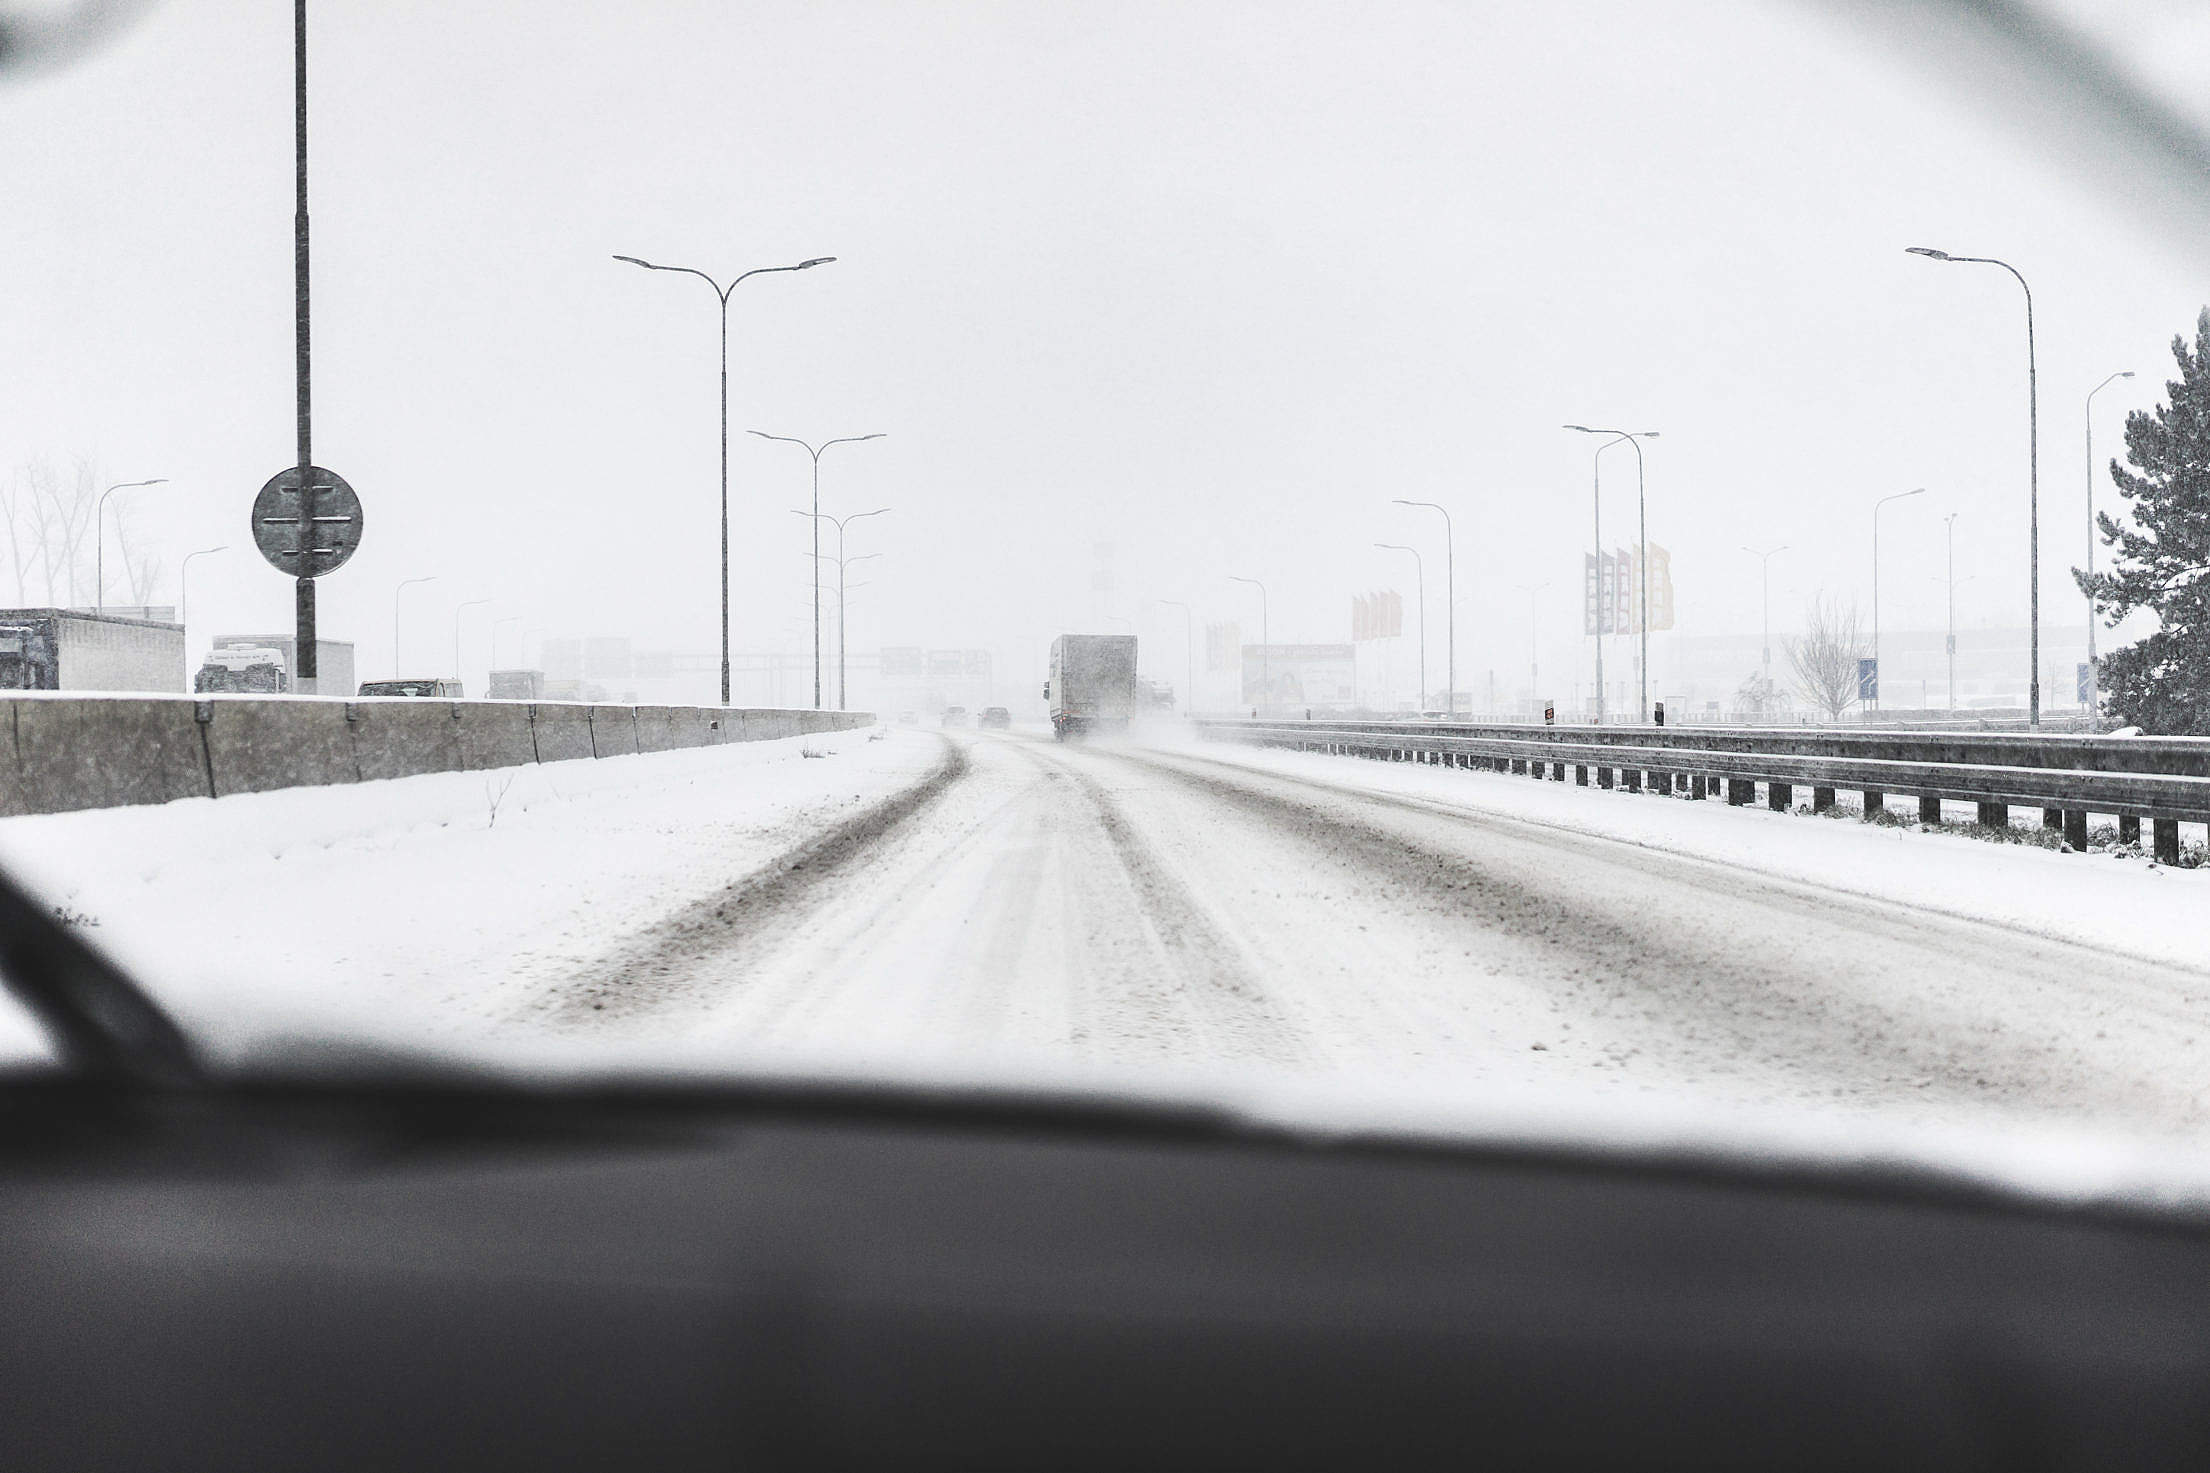 Snow Calamity on Highway Free Stock Photo